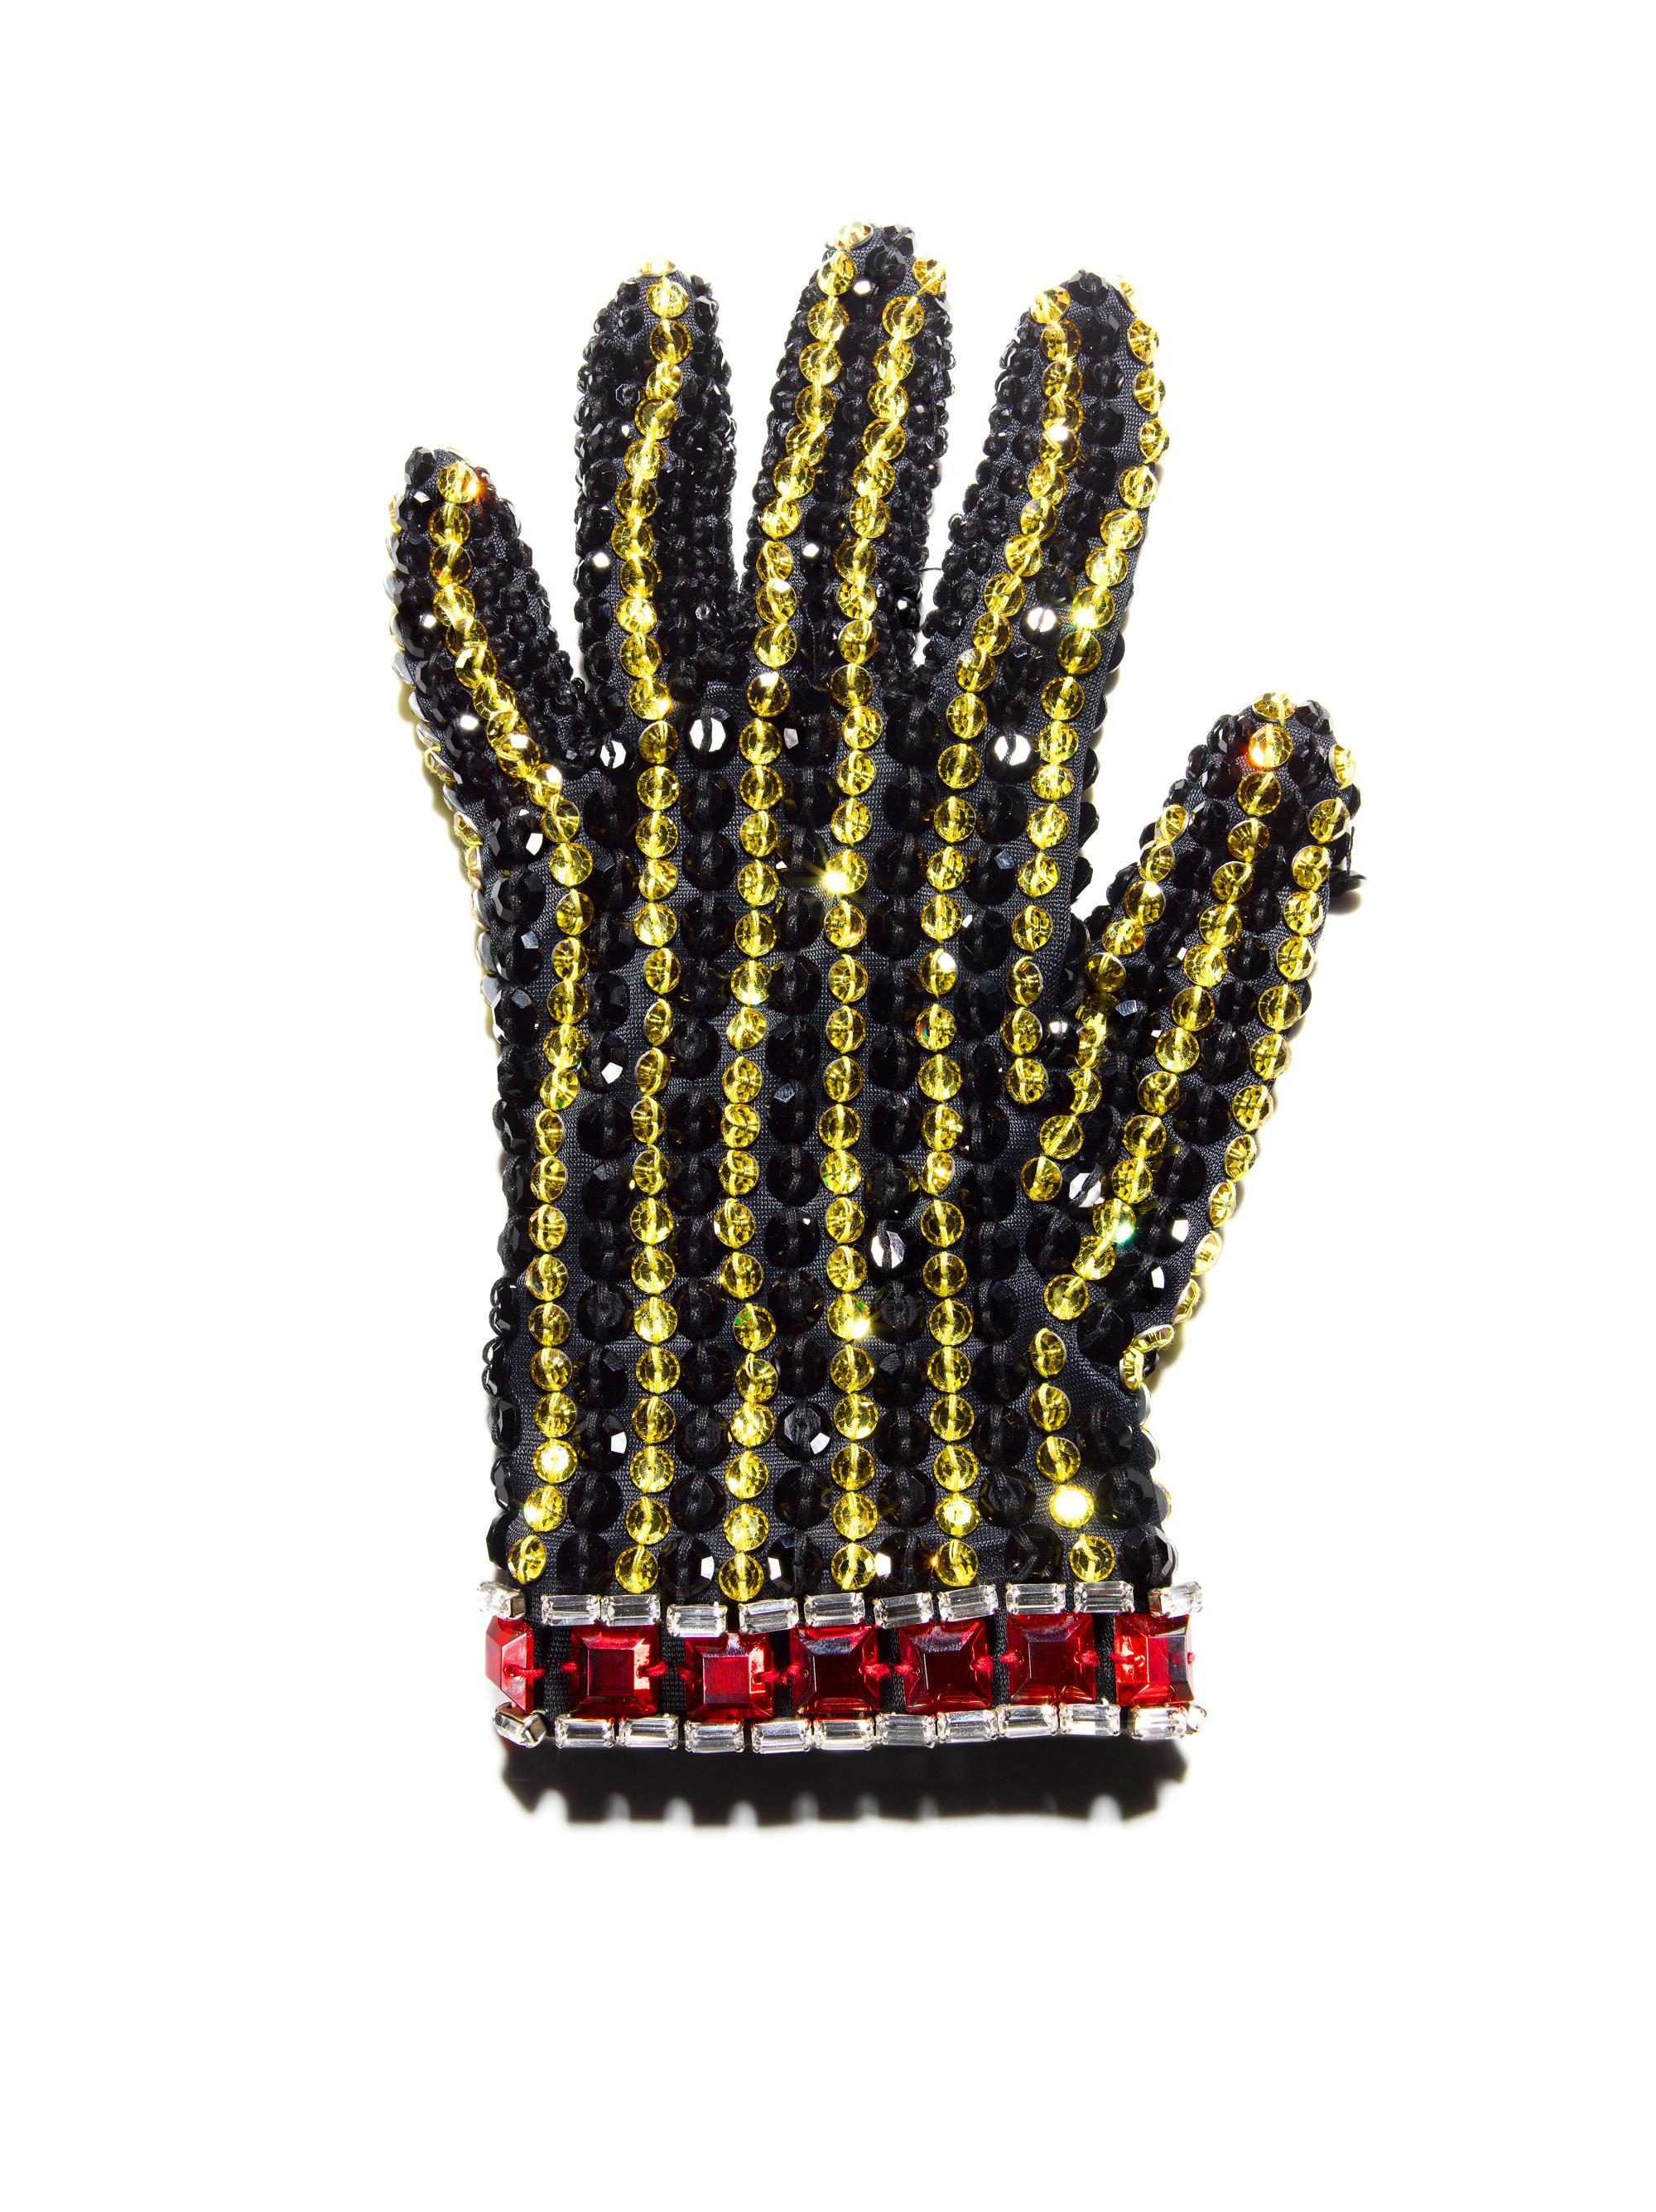 Tom Schierlitz Still-Life Photograph - Black Glove (Michael Jackson) 48 x 64"  